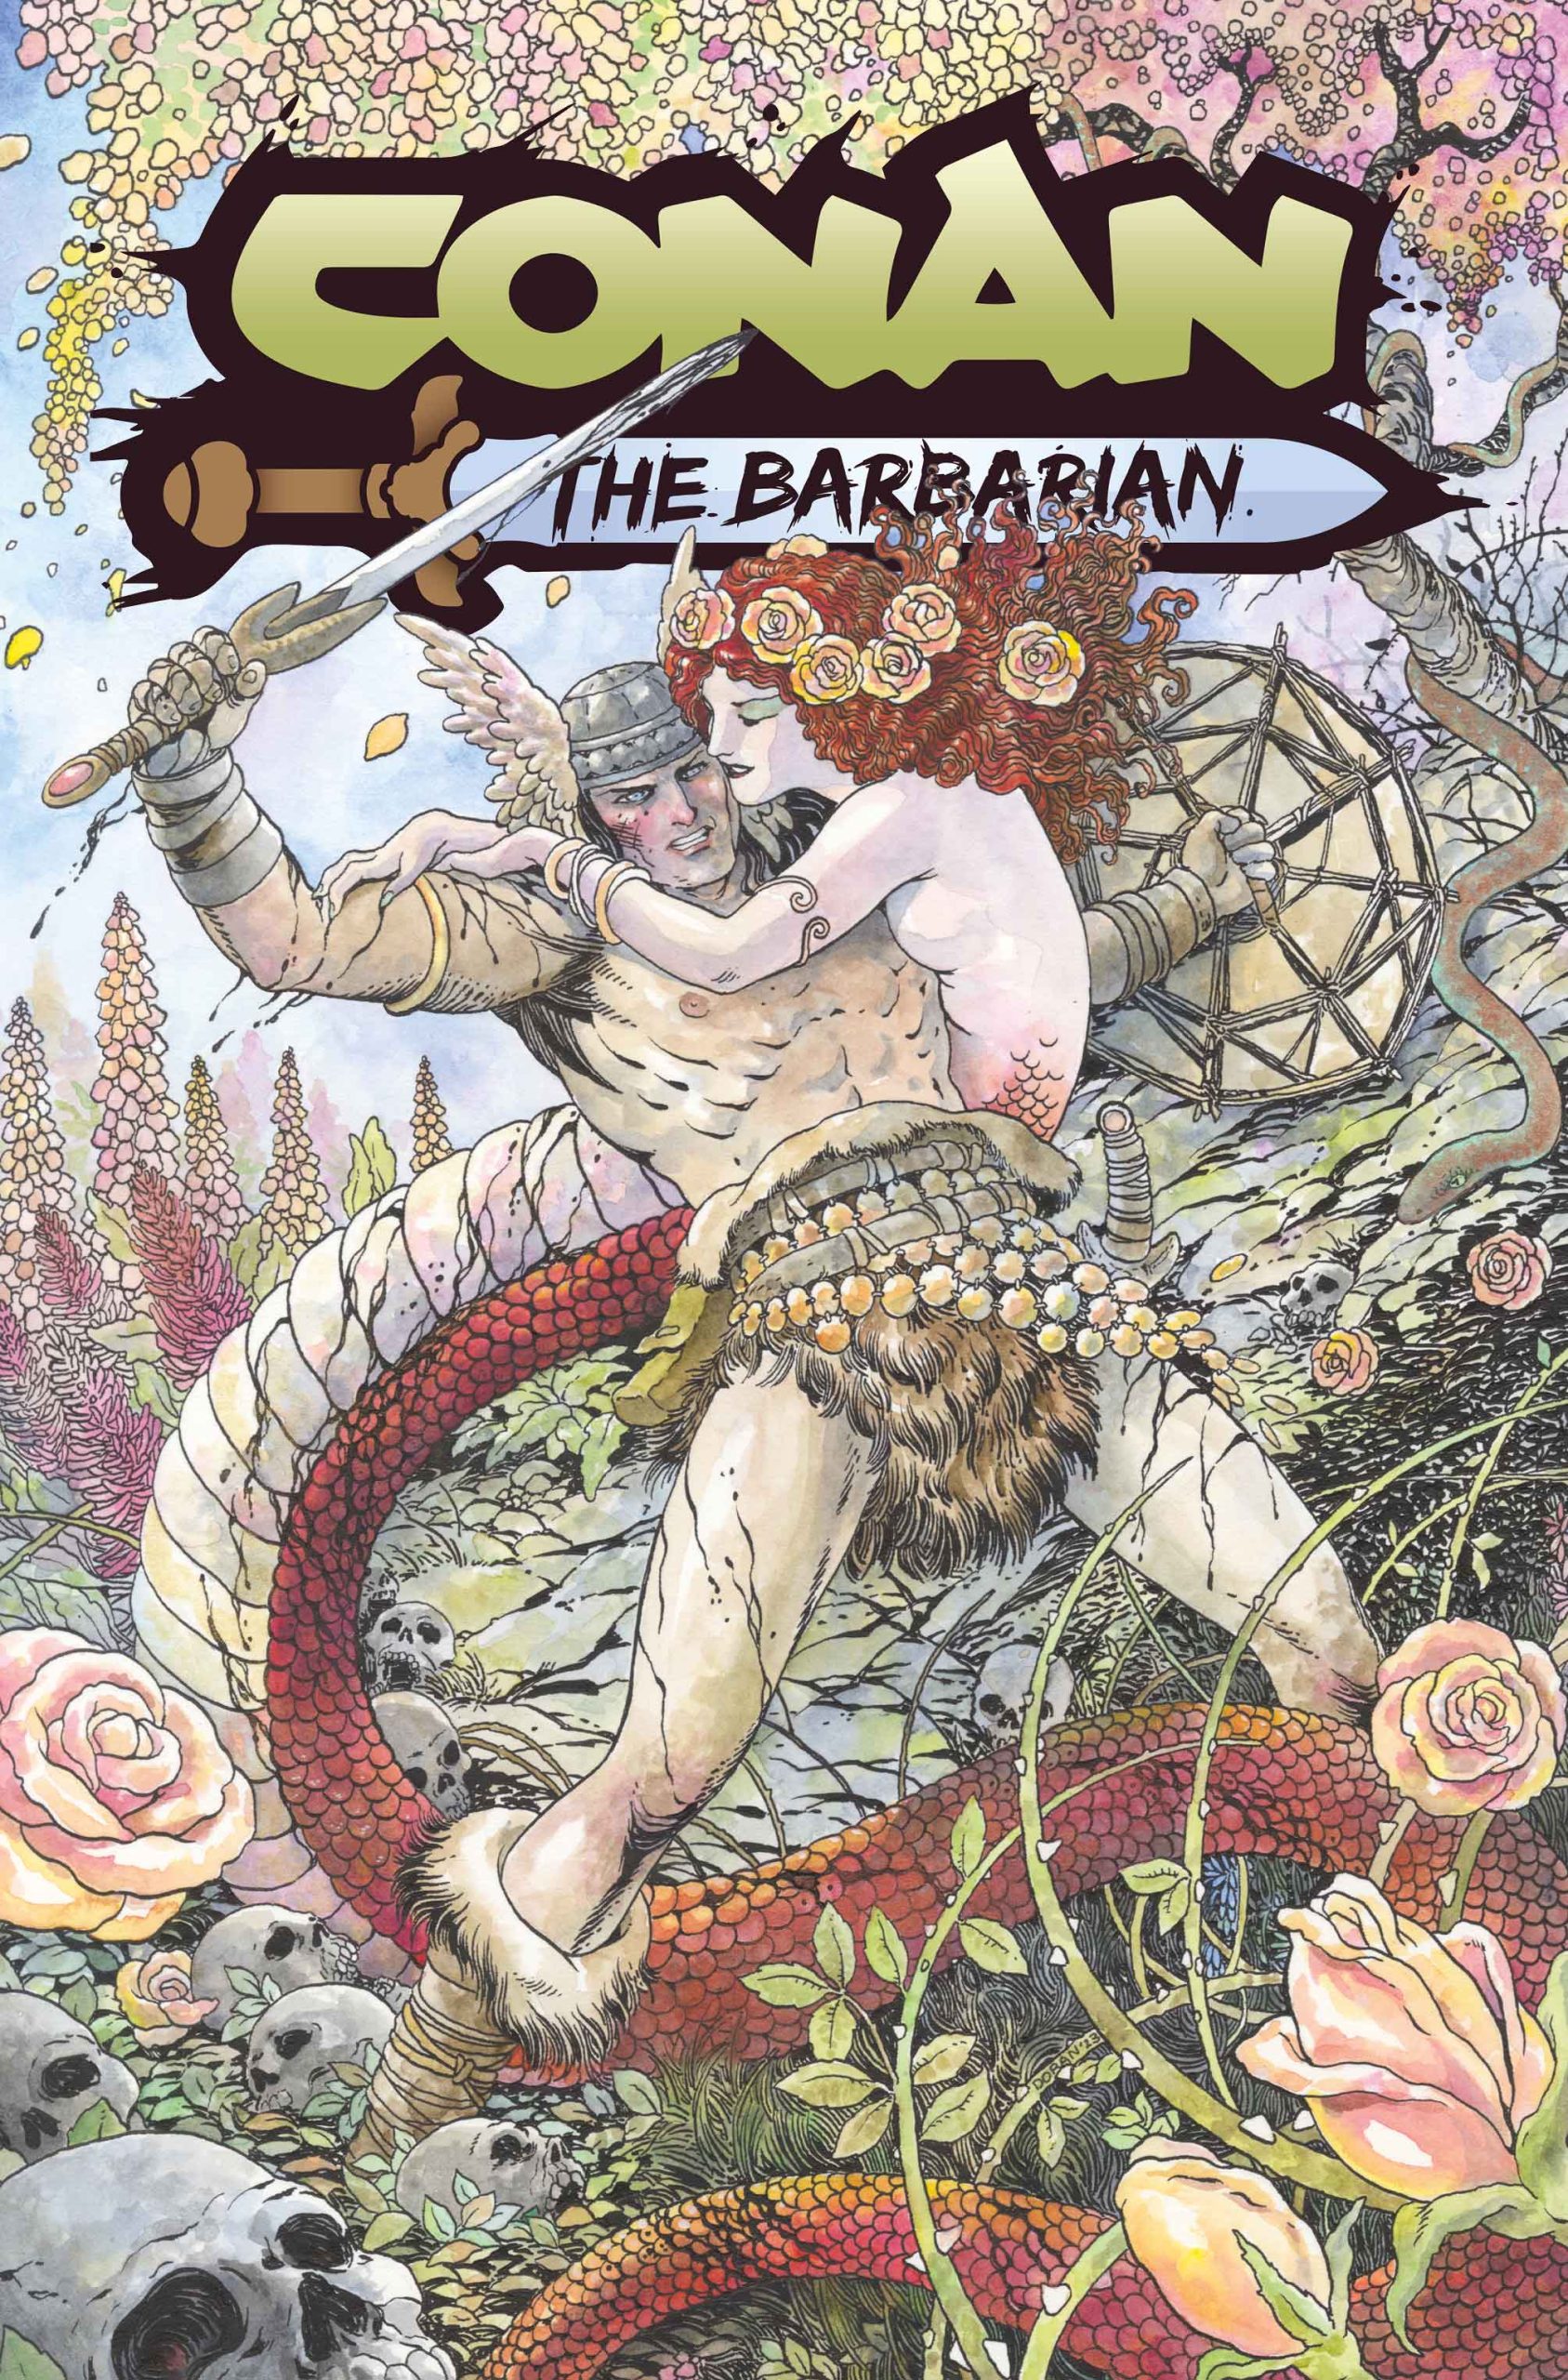 Conan the Barbian #1 by Colleen Doran